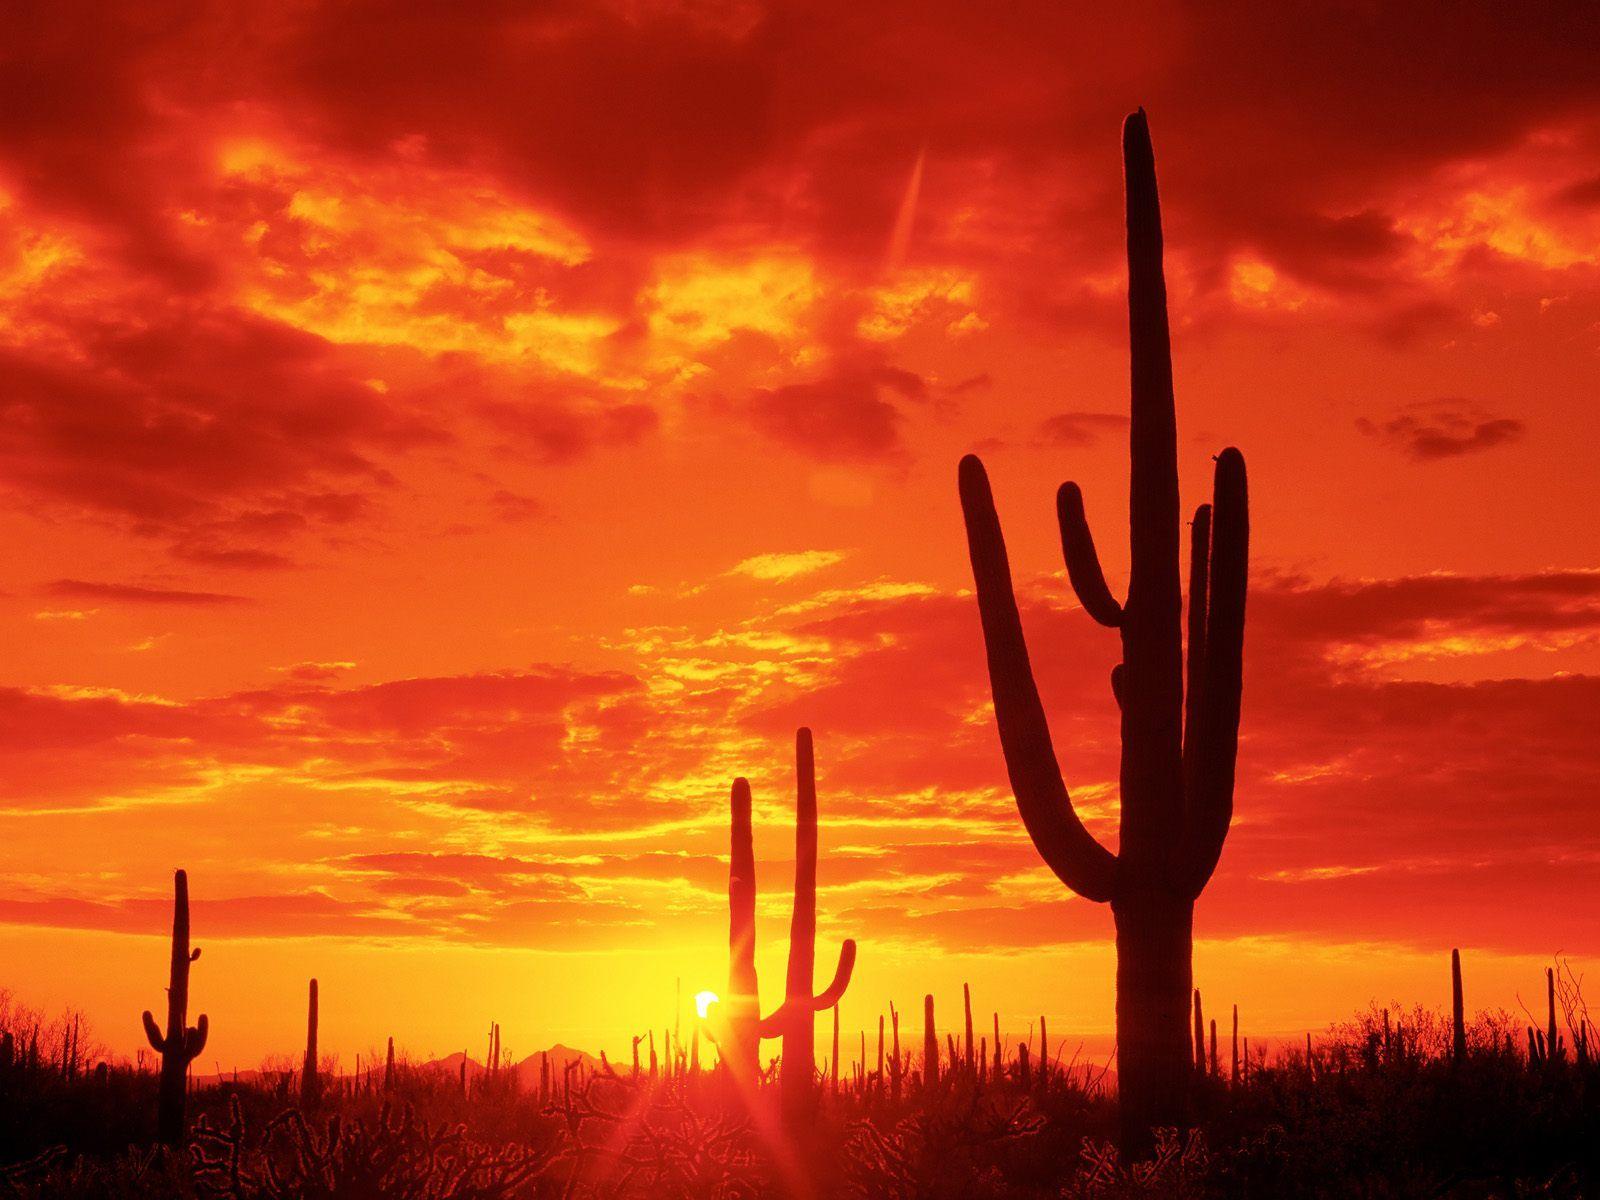 Burning Sunset Saguaro National Park Arizona. New Heaven On Earth!